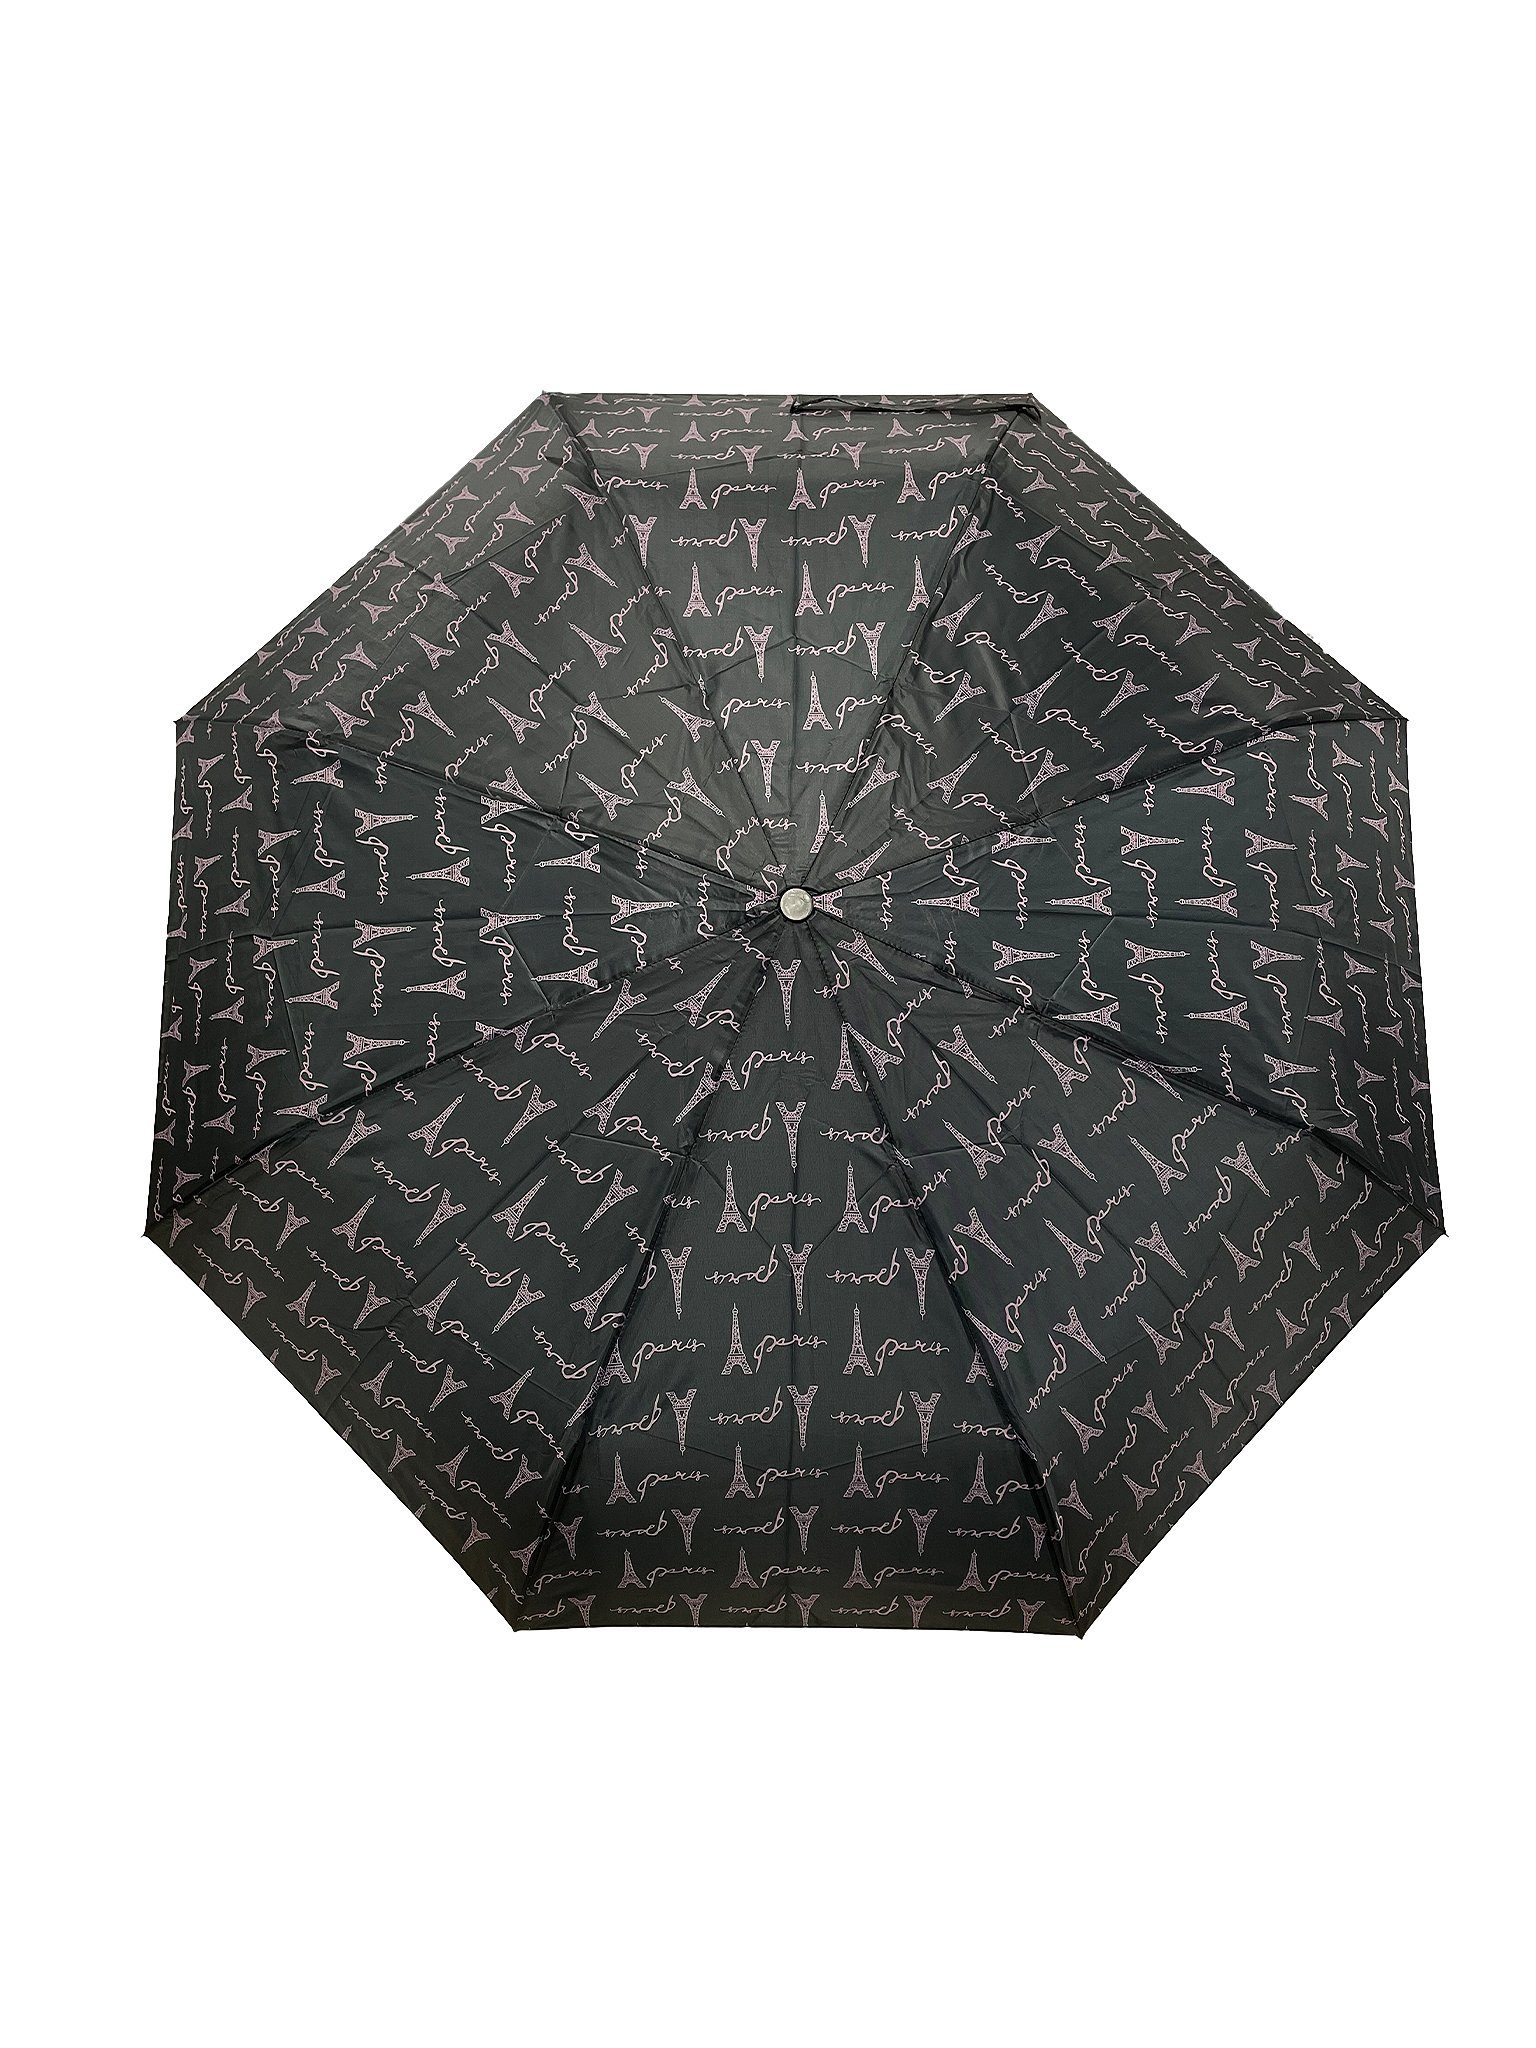 Gemustert Paris ANELY in Taschenschirm, Regenschirm Kleiner Schwarz-Lila 6746 Taschenregenschirm